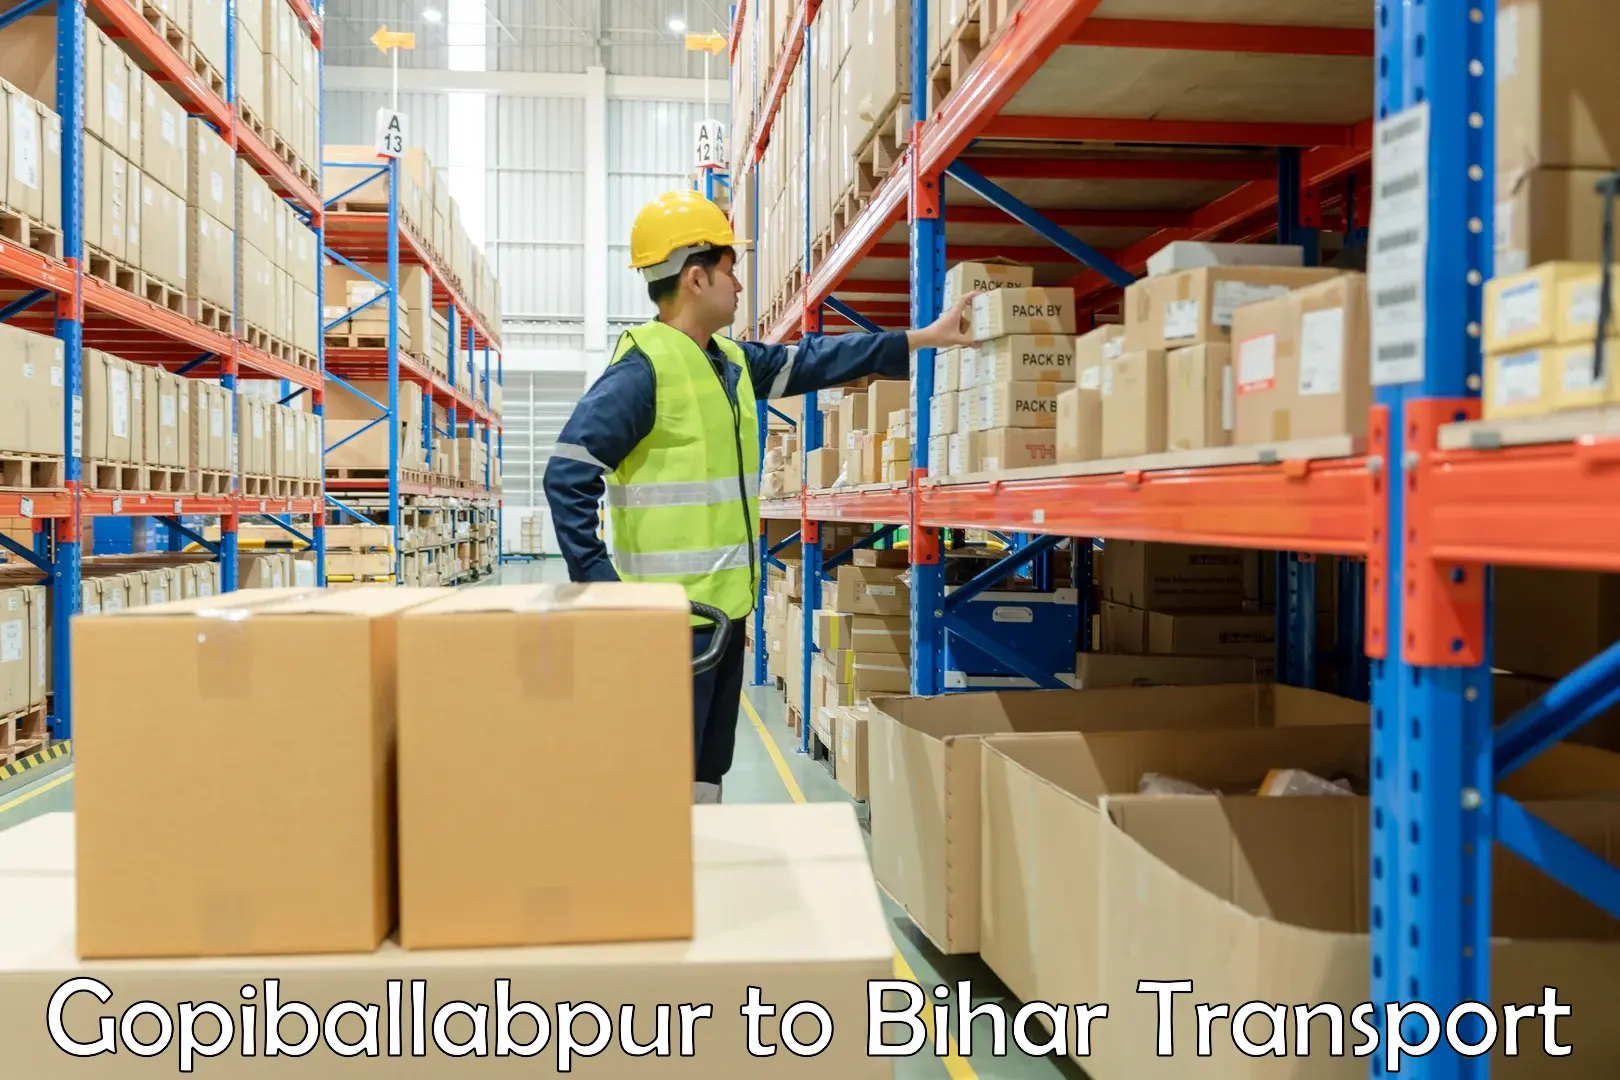 Online transport service Gopiballabpur to Khagaria